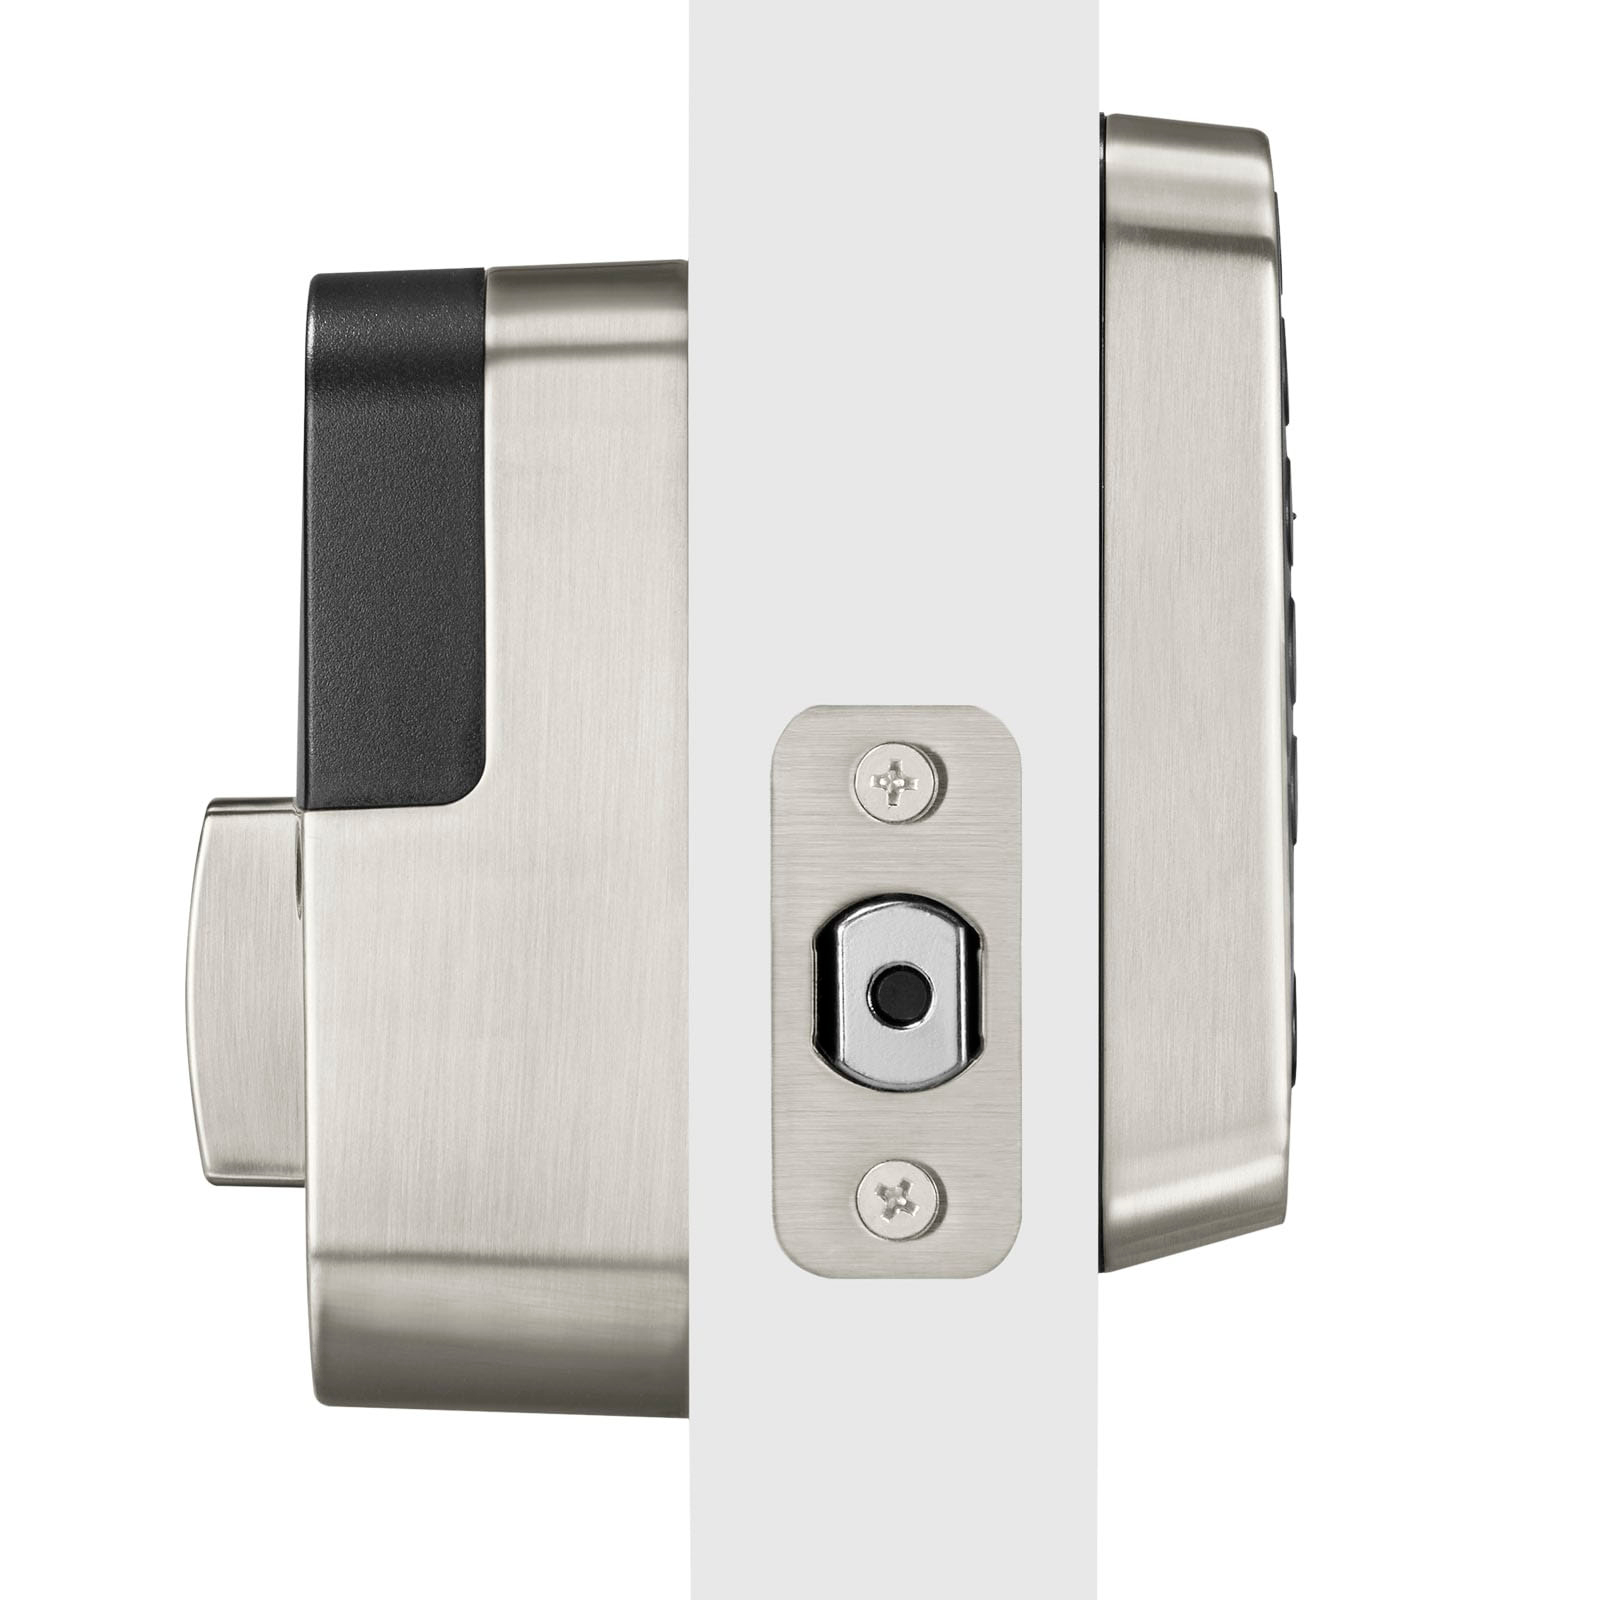 Angle View: Yale - Assure Lock 2 Smart Lock W-Fi Deadbolt with App/Keypad/Key Access - Satin Nickel